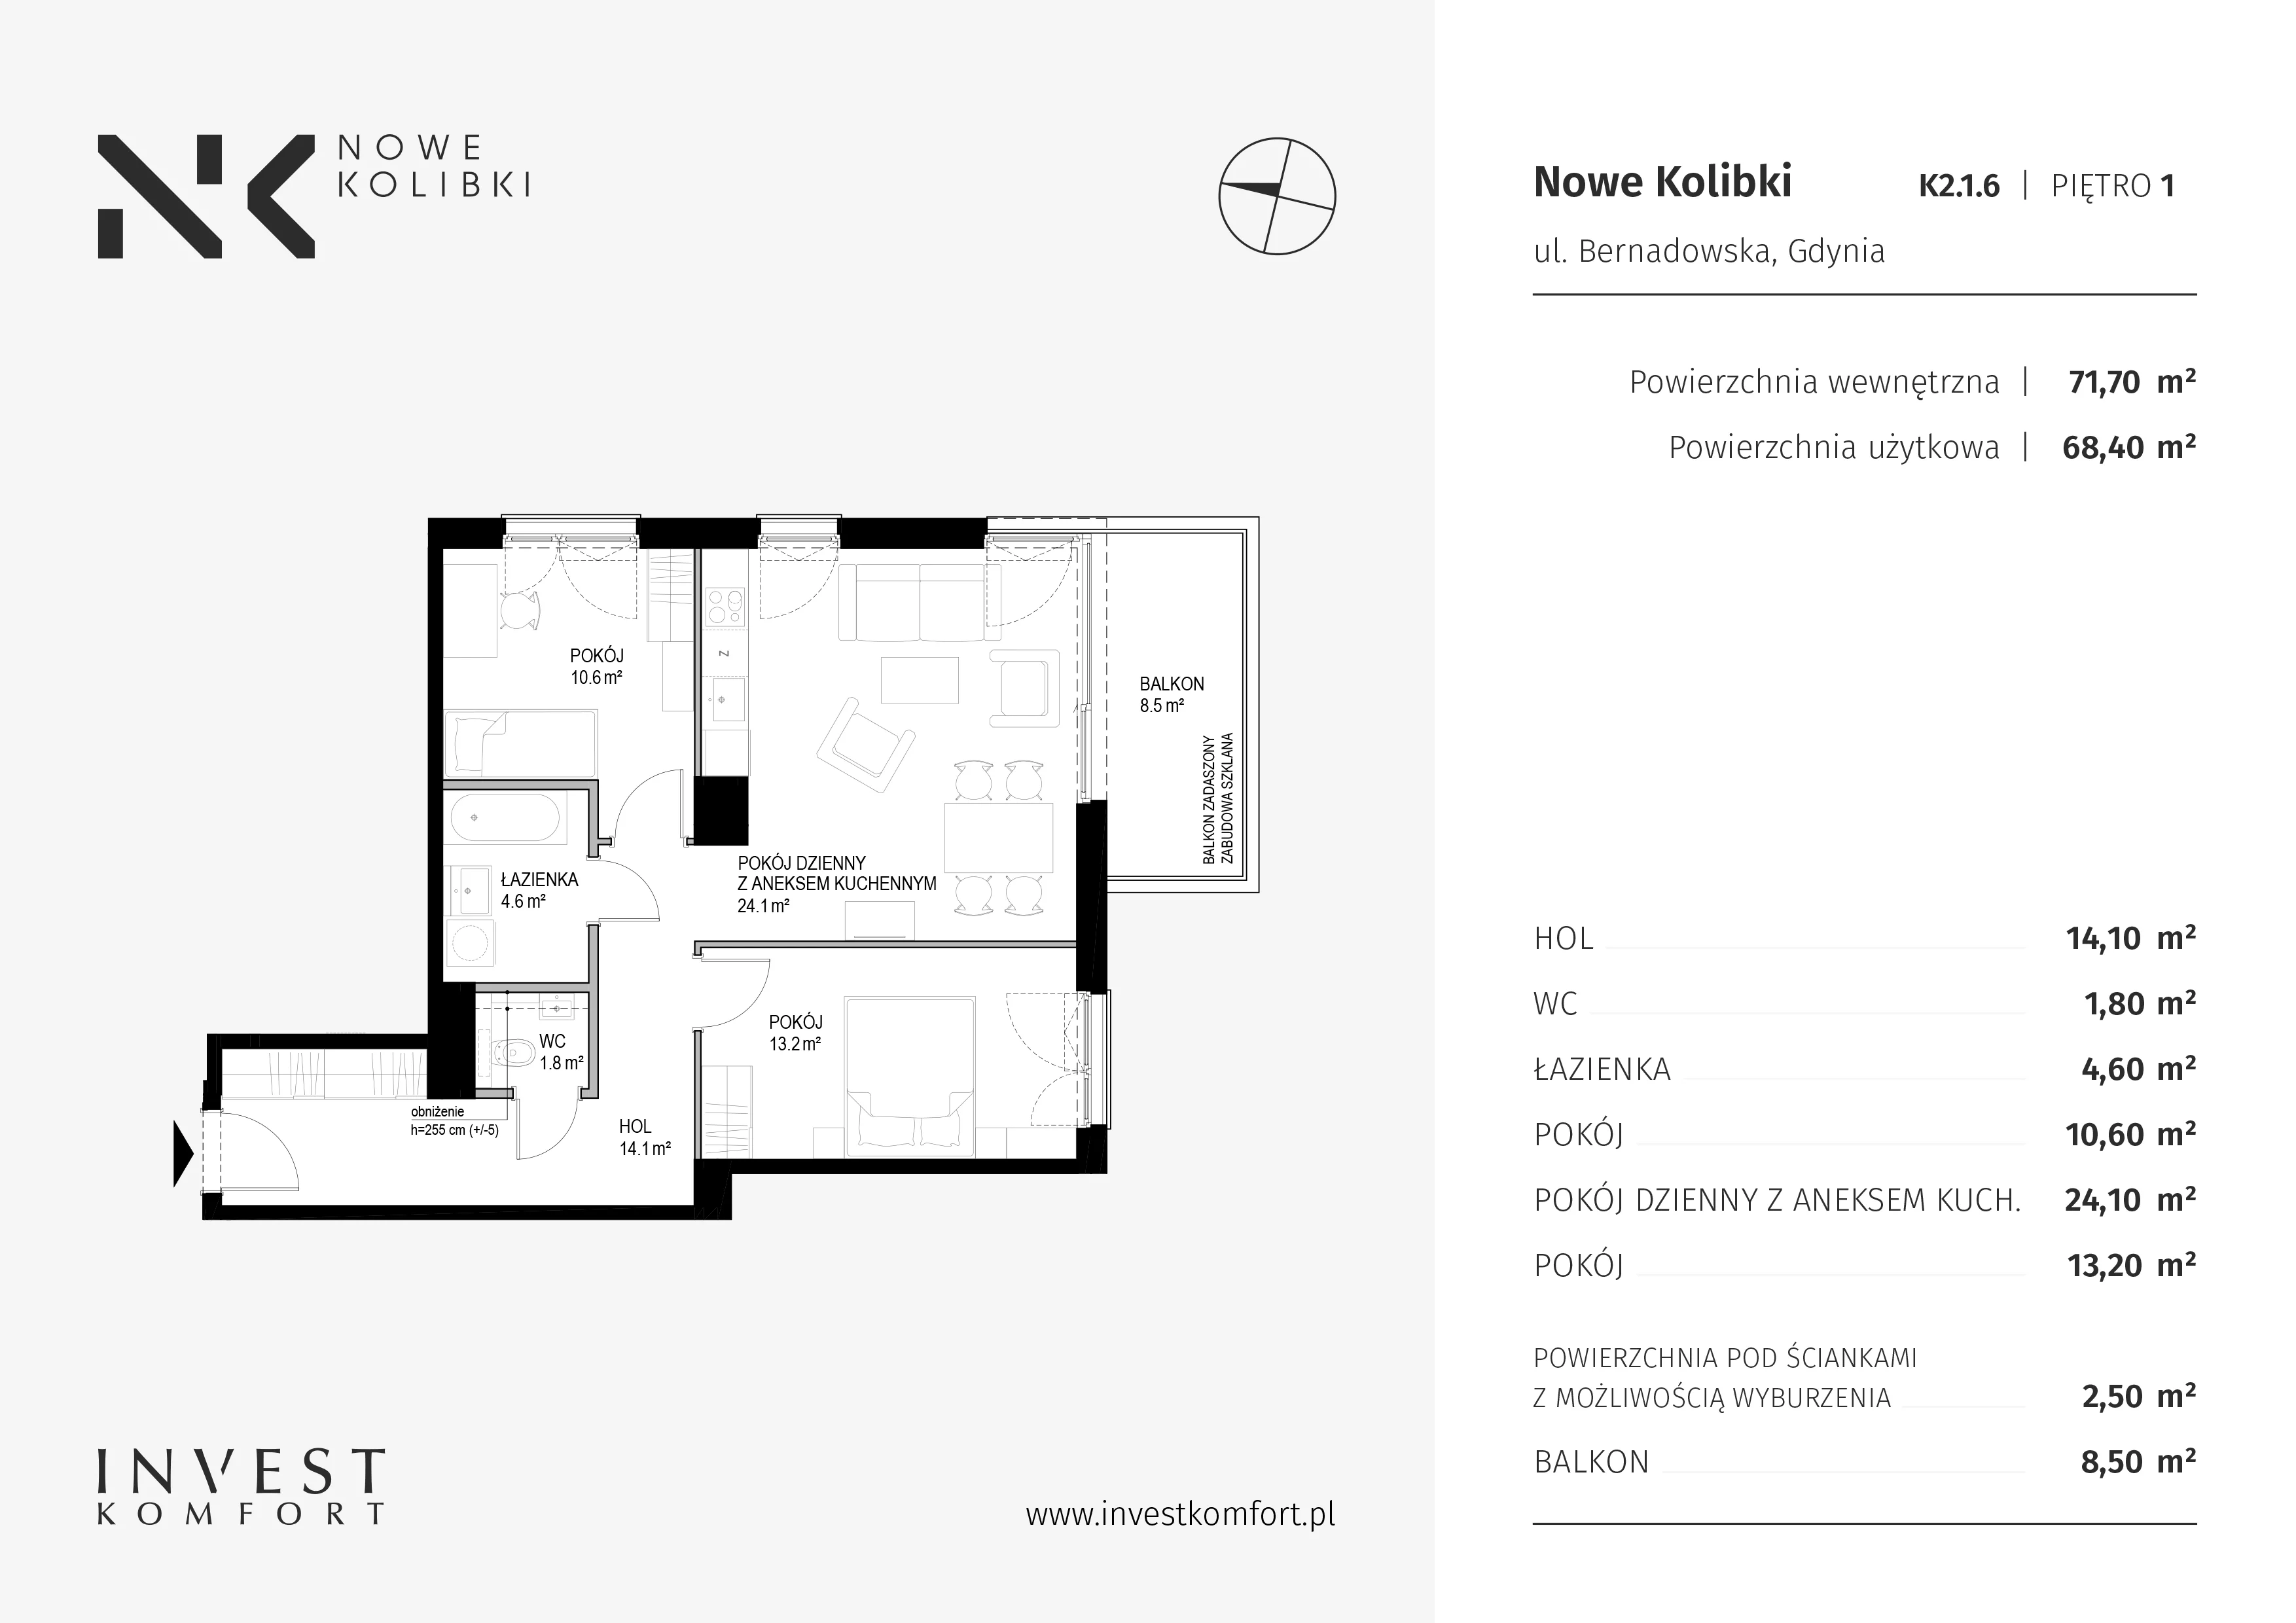 Apartament 71,70 m², piętro 1, oferta nr K2.1.6, Nowe Kolibki, Gdynia, Orłowo, Kolibki, ul. Bernadowska